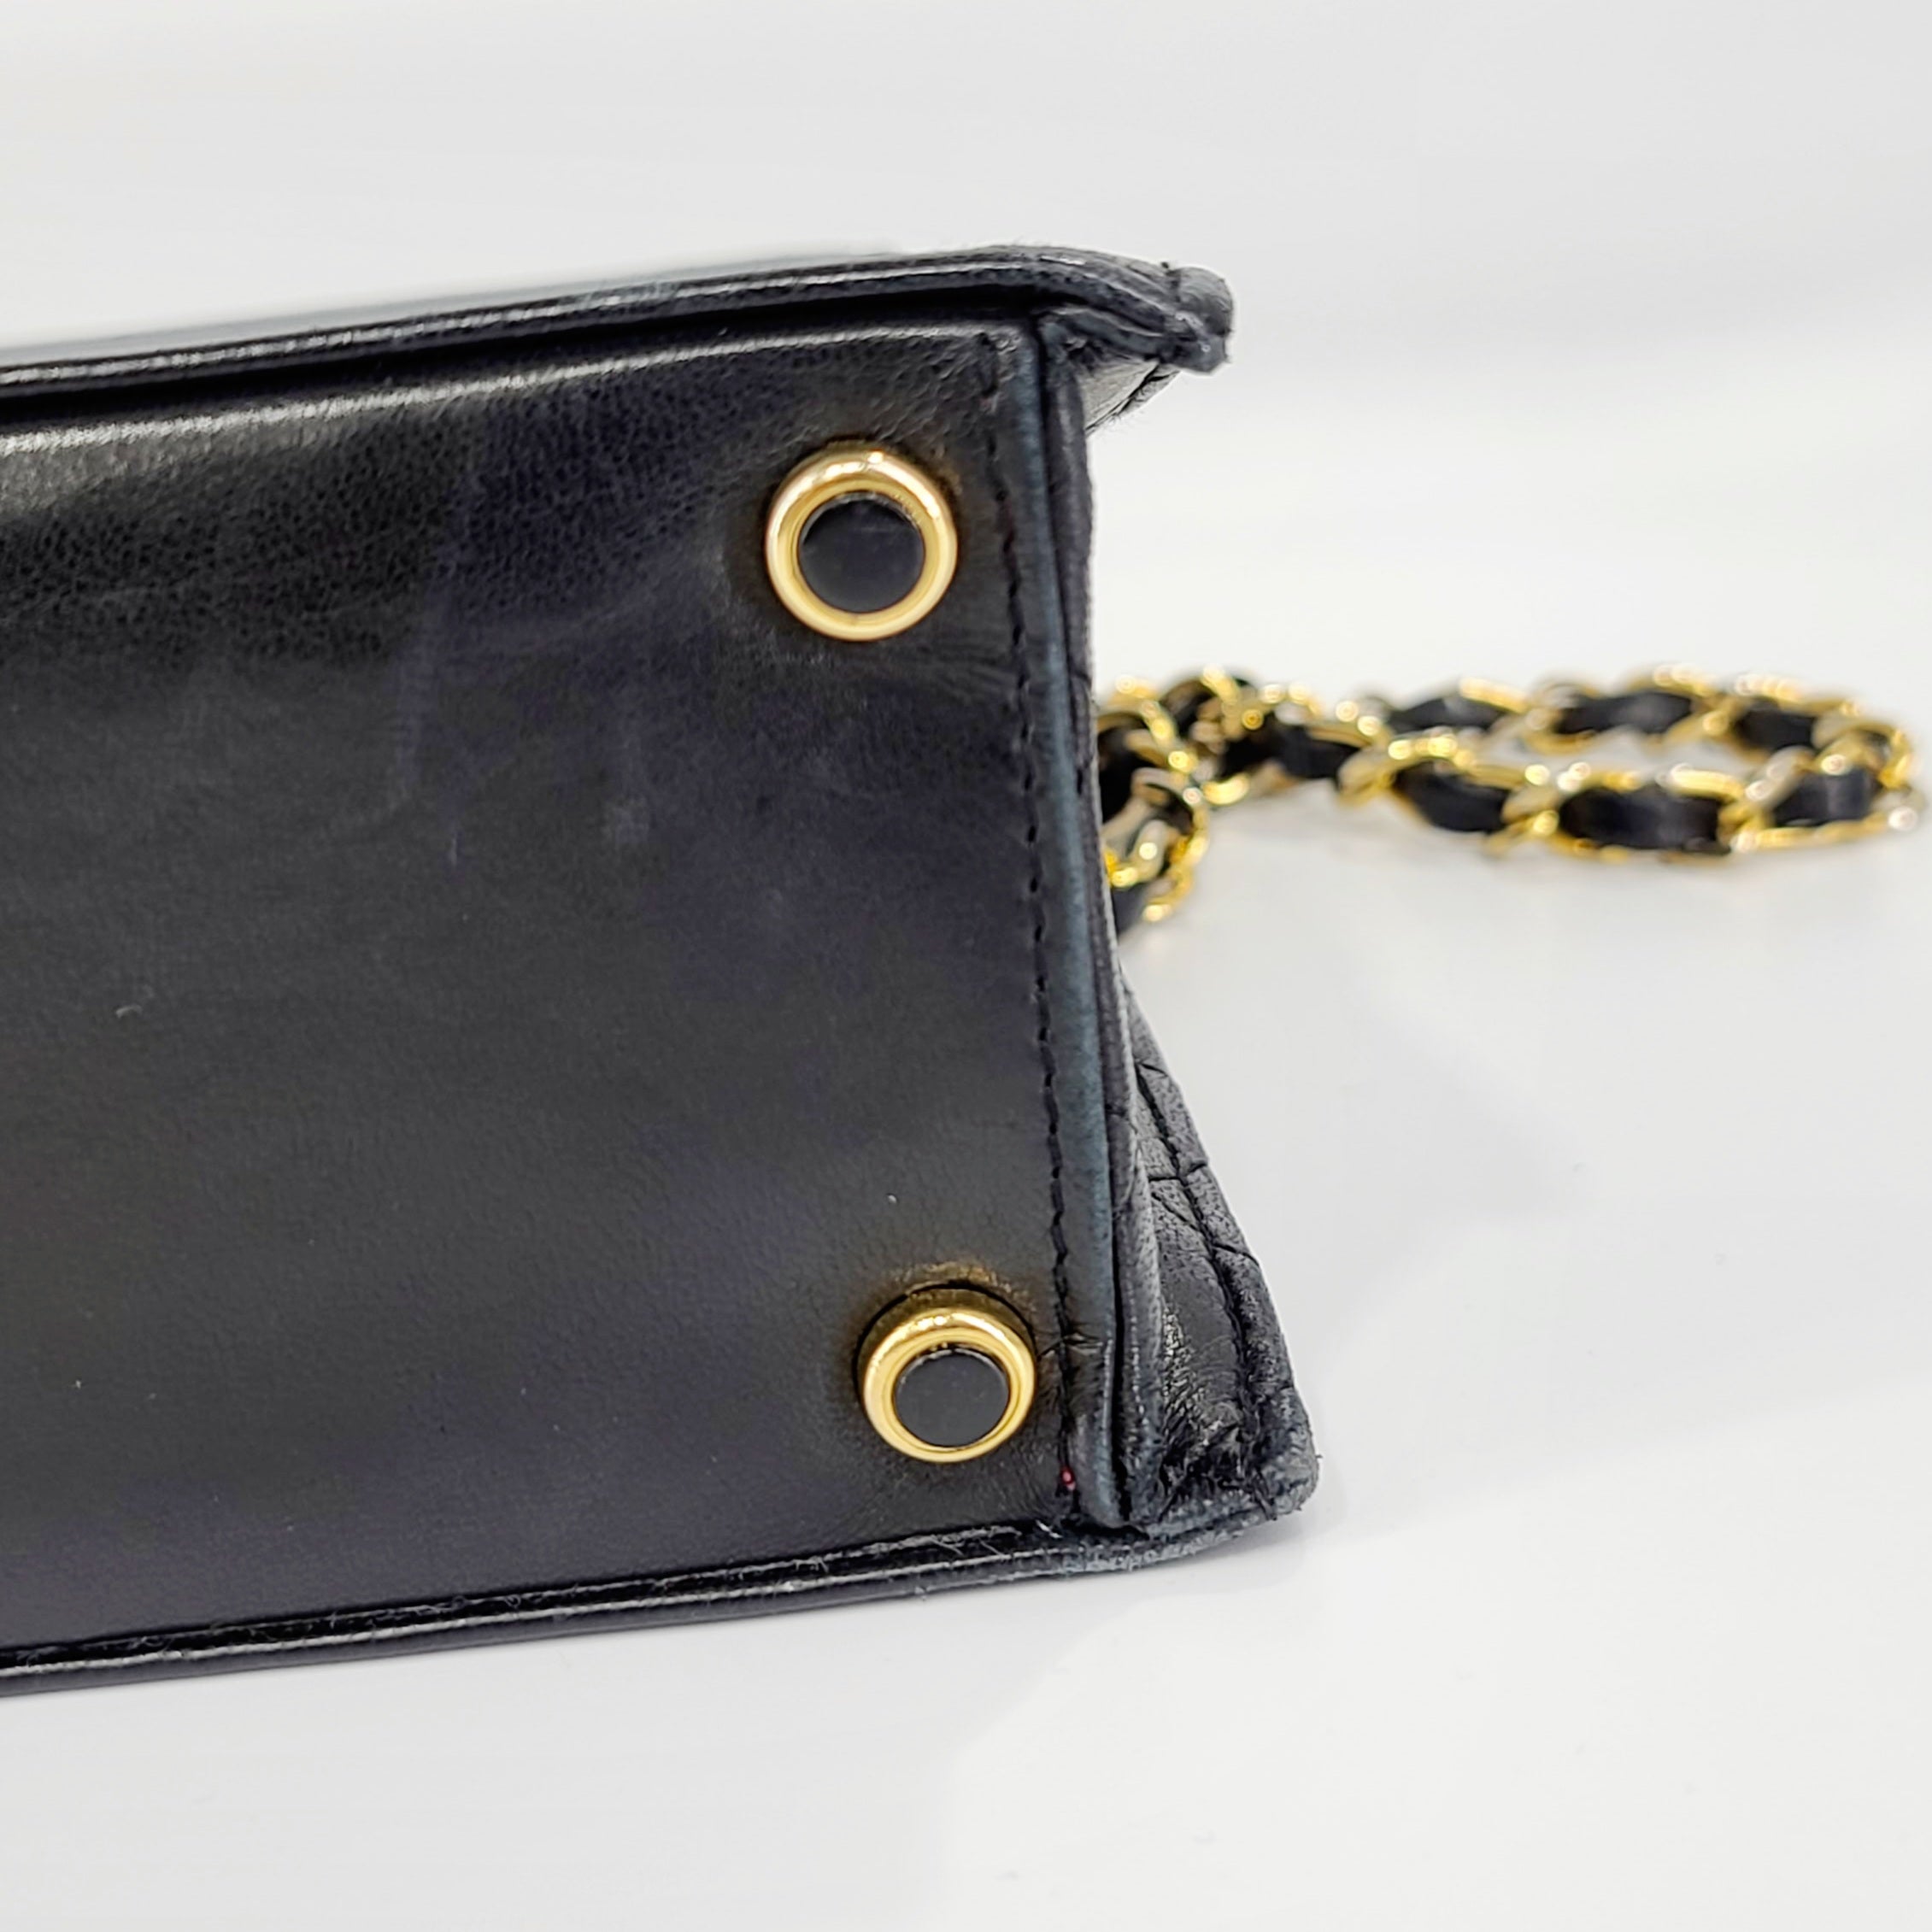 Chanel Women's Matelasse Leather Handbag